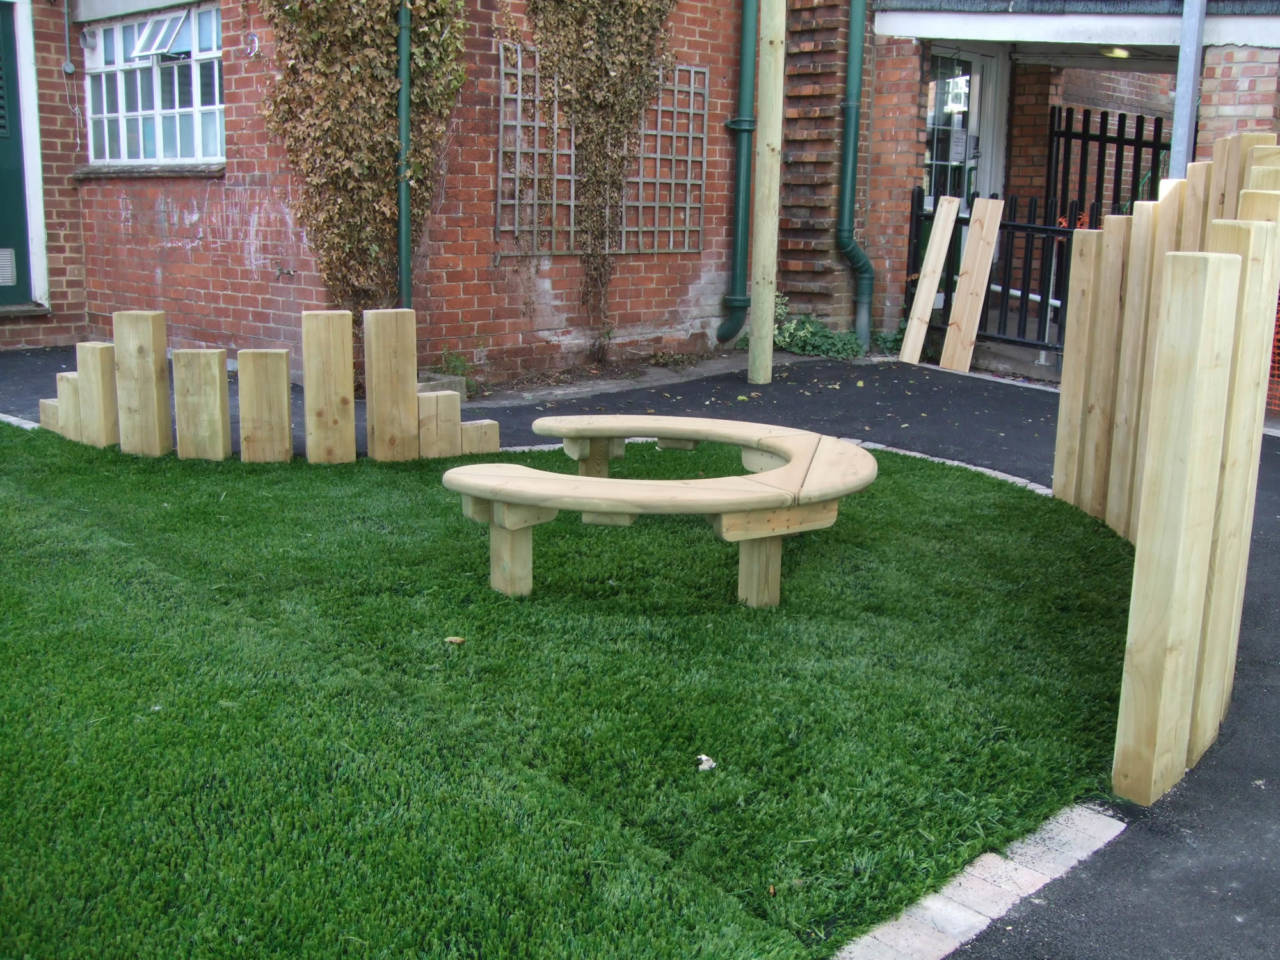 West Oxford Primary School Landscape Design